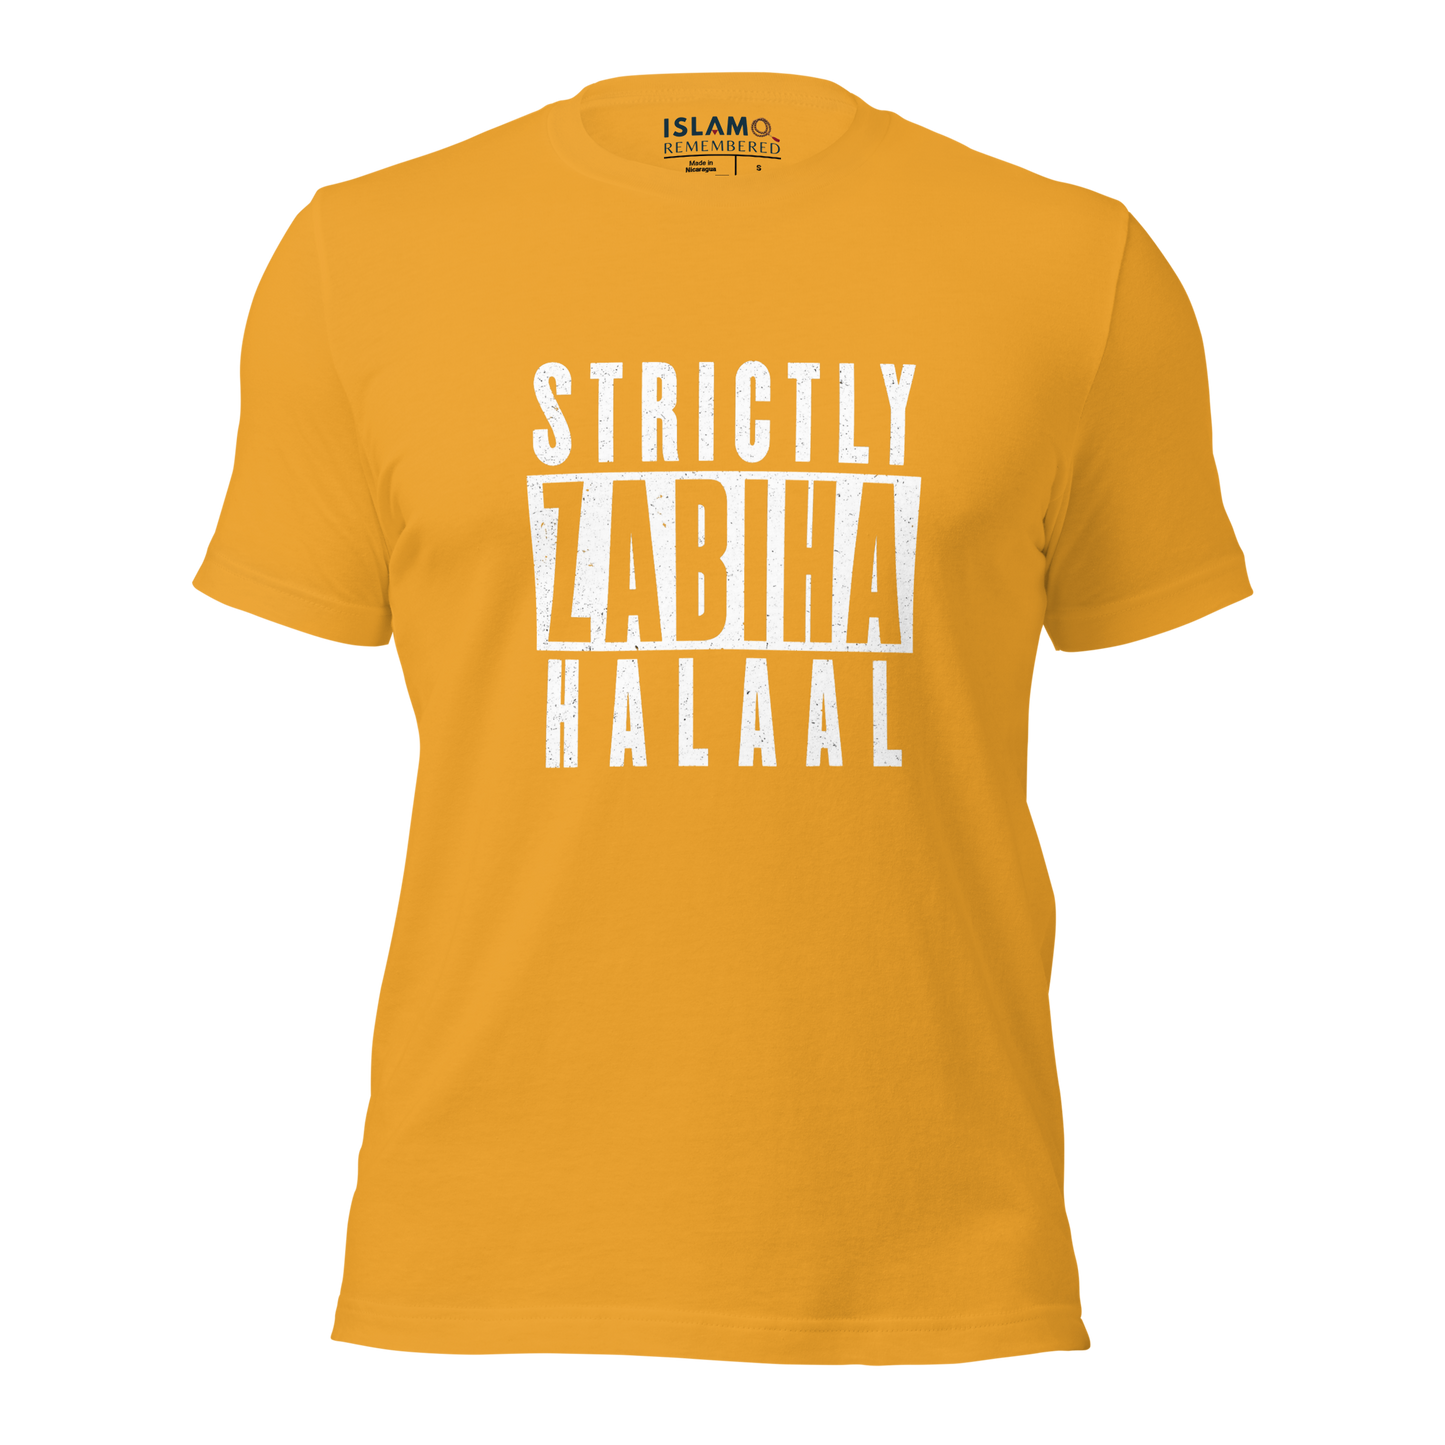 ADULT T-Shirt - STRICTLY ZABIHA HALAAL